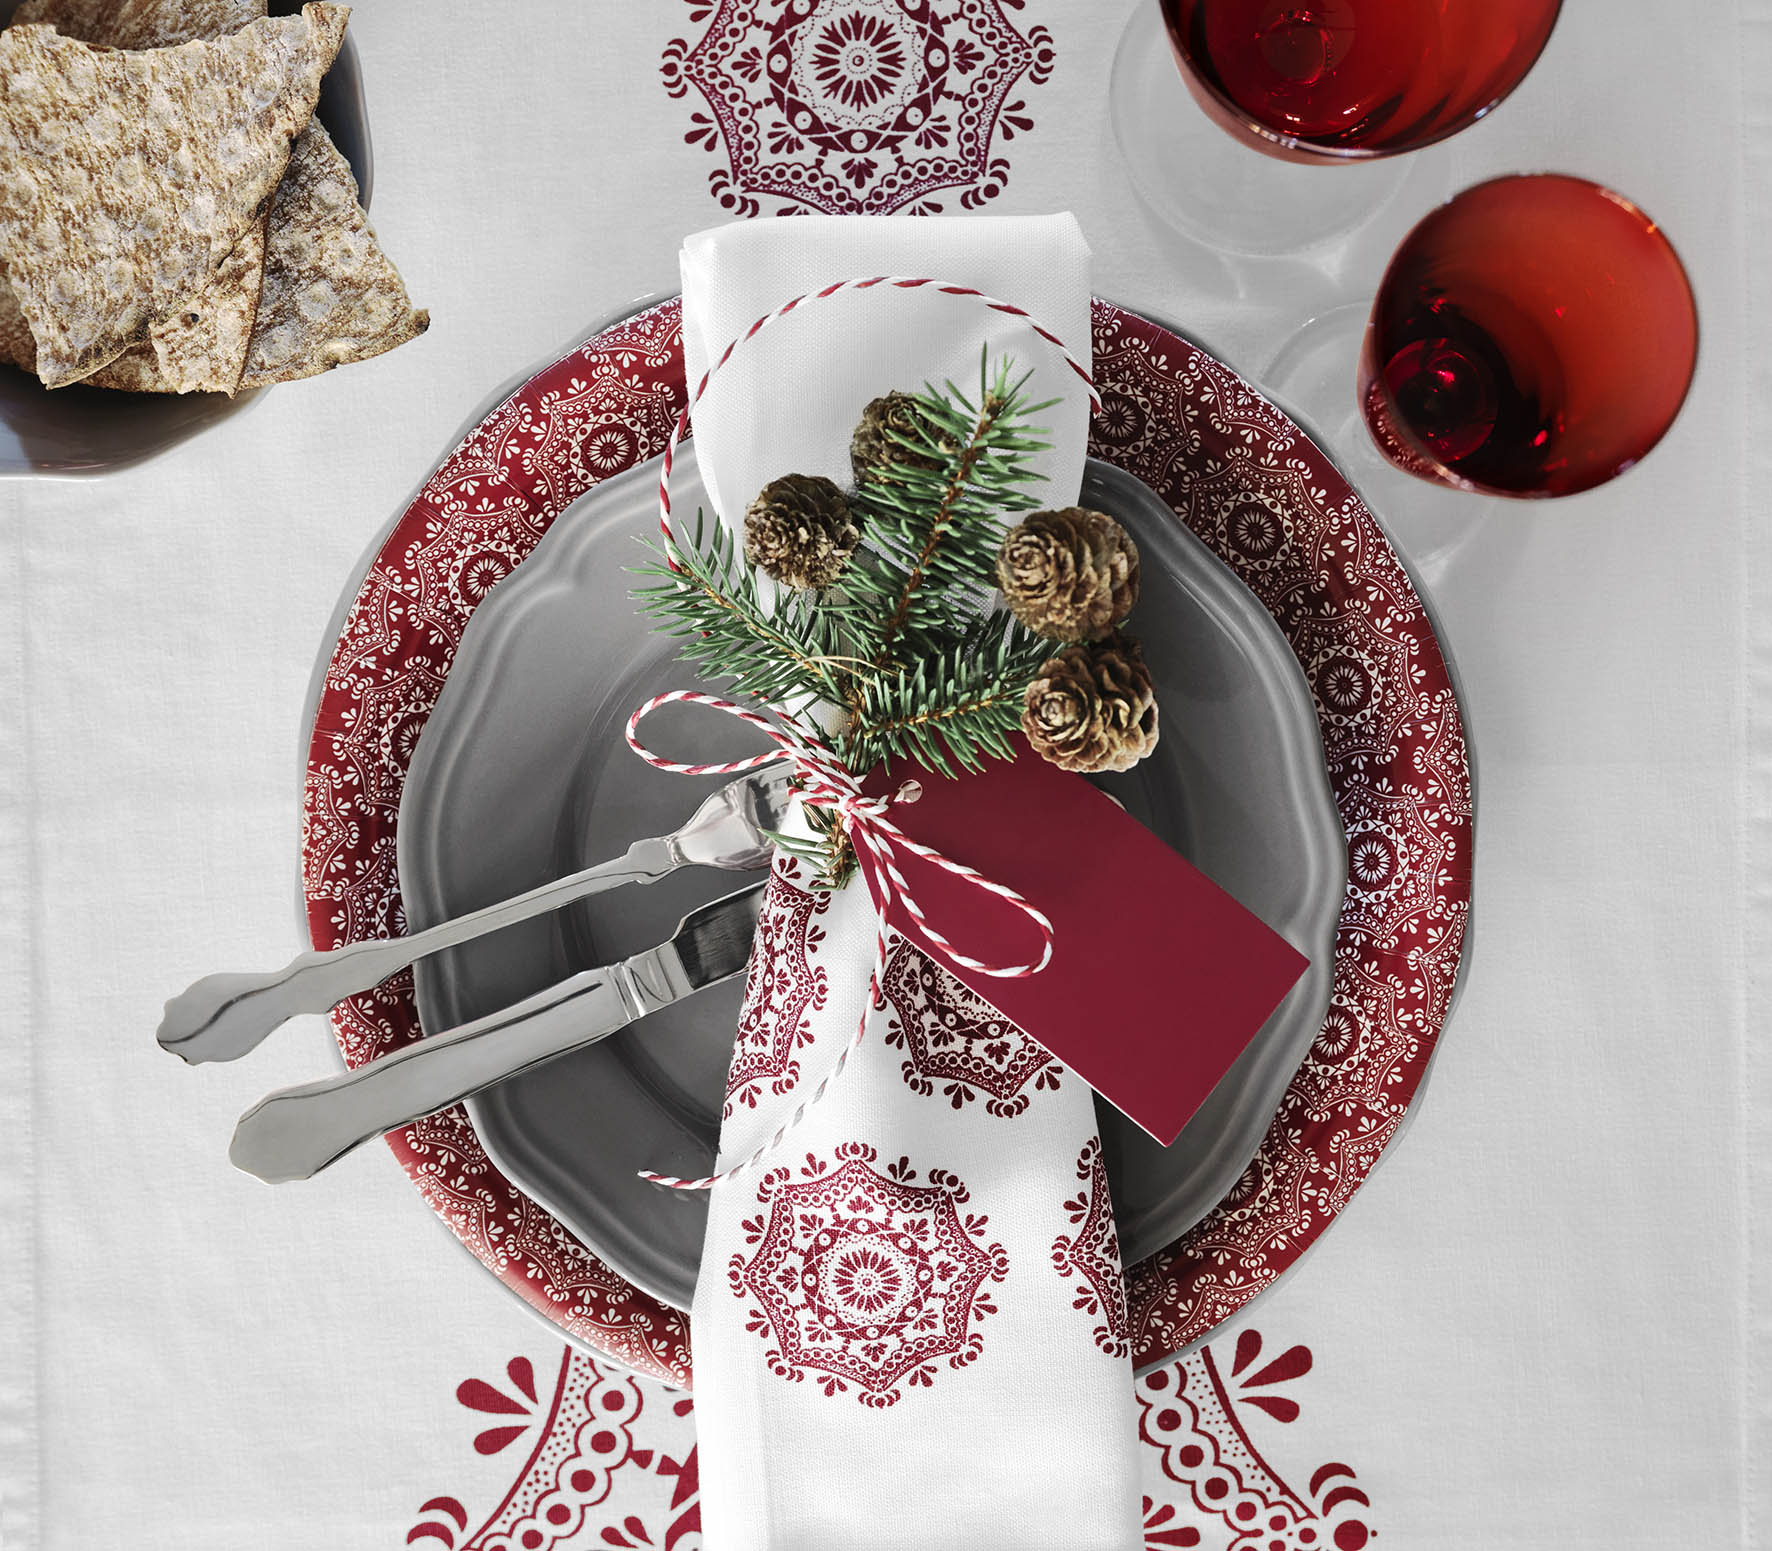 Kerst koken tafelen tafel dekken bakken IKEA 2015